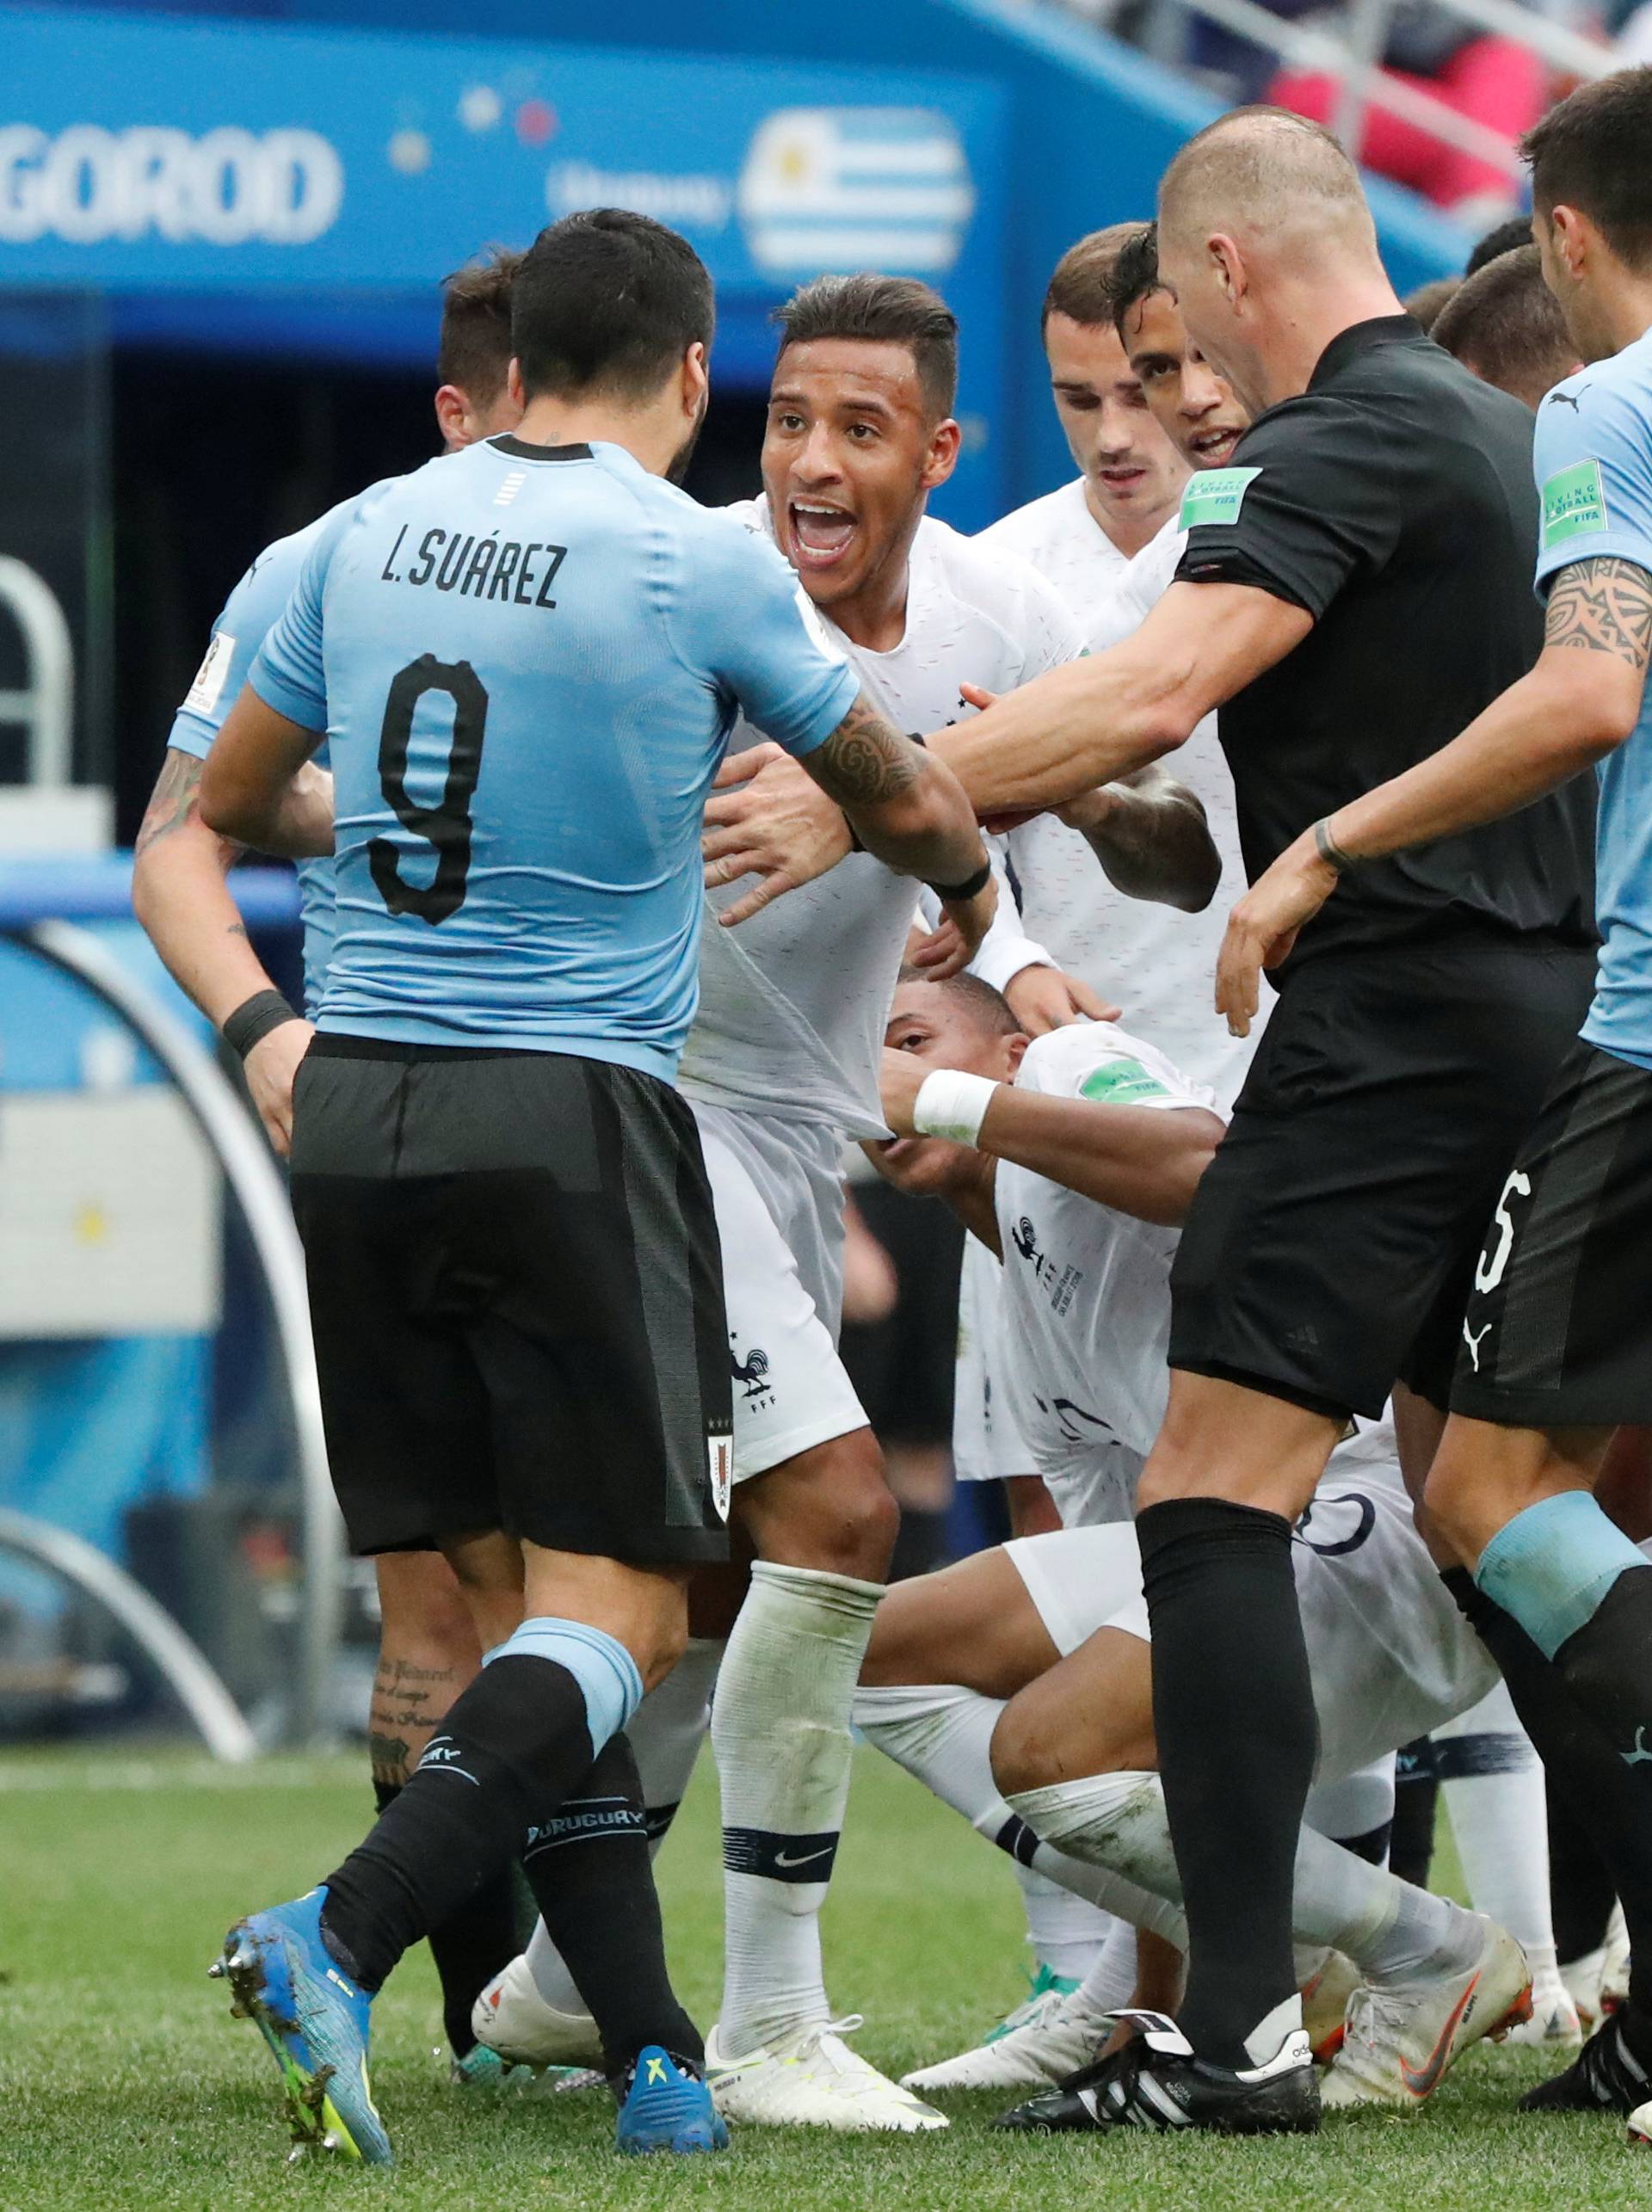 World Cup - Quarter Final - Uruguay vs France